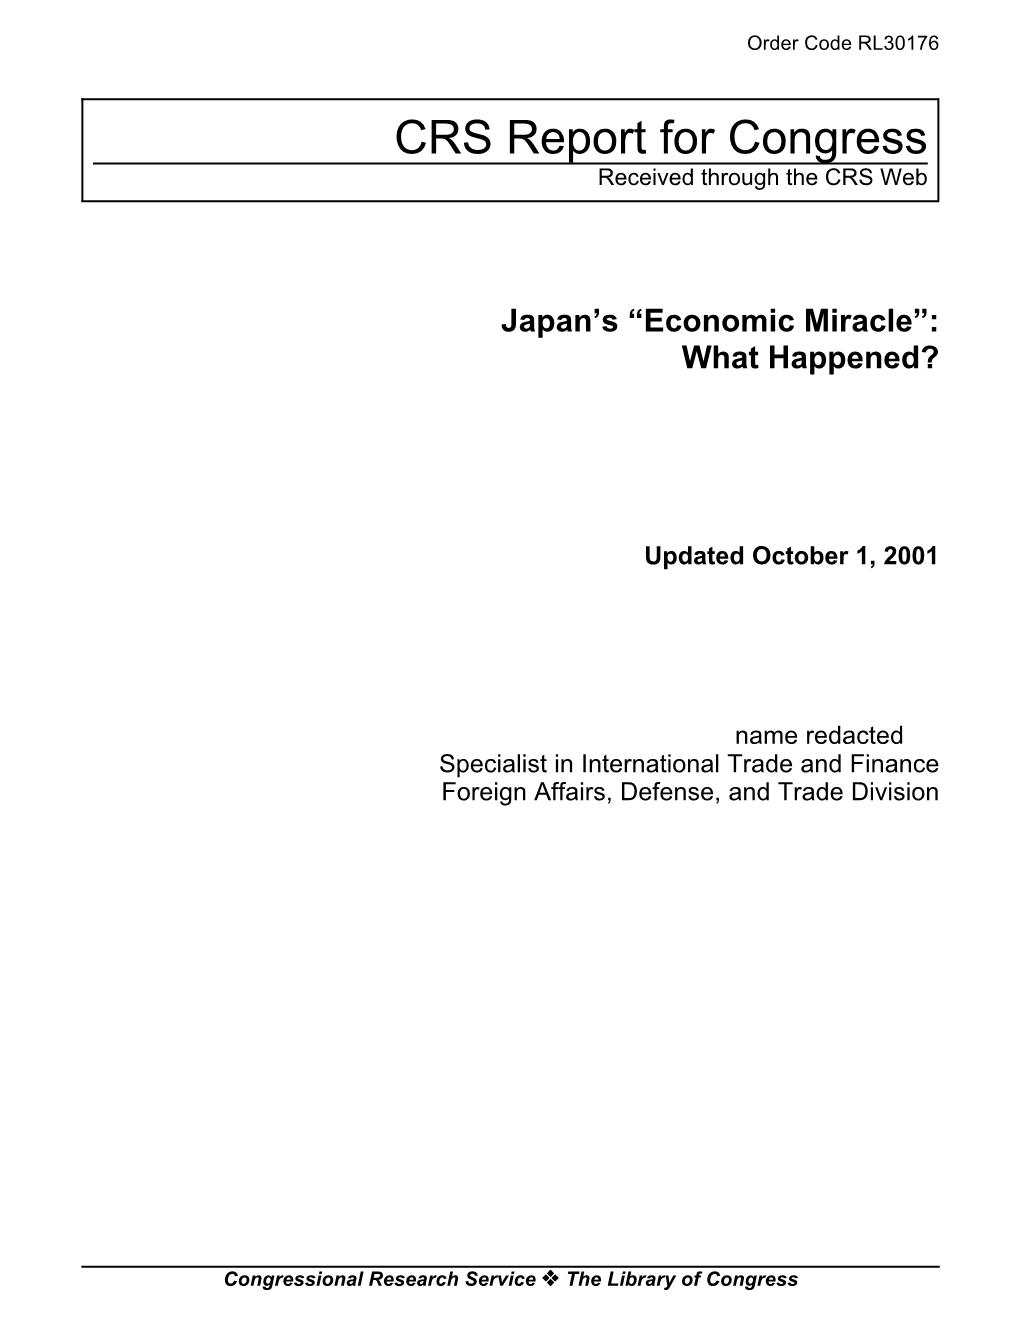 Economic Miracle”: What Happened?